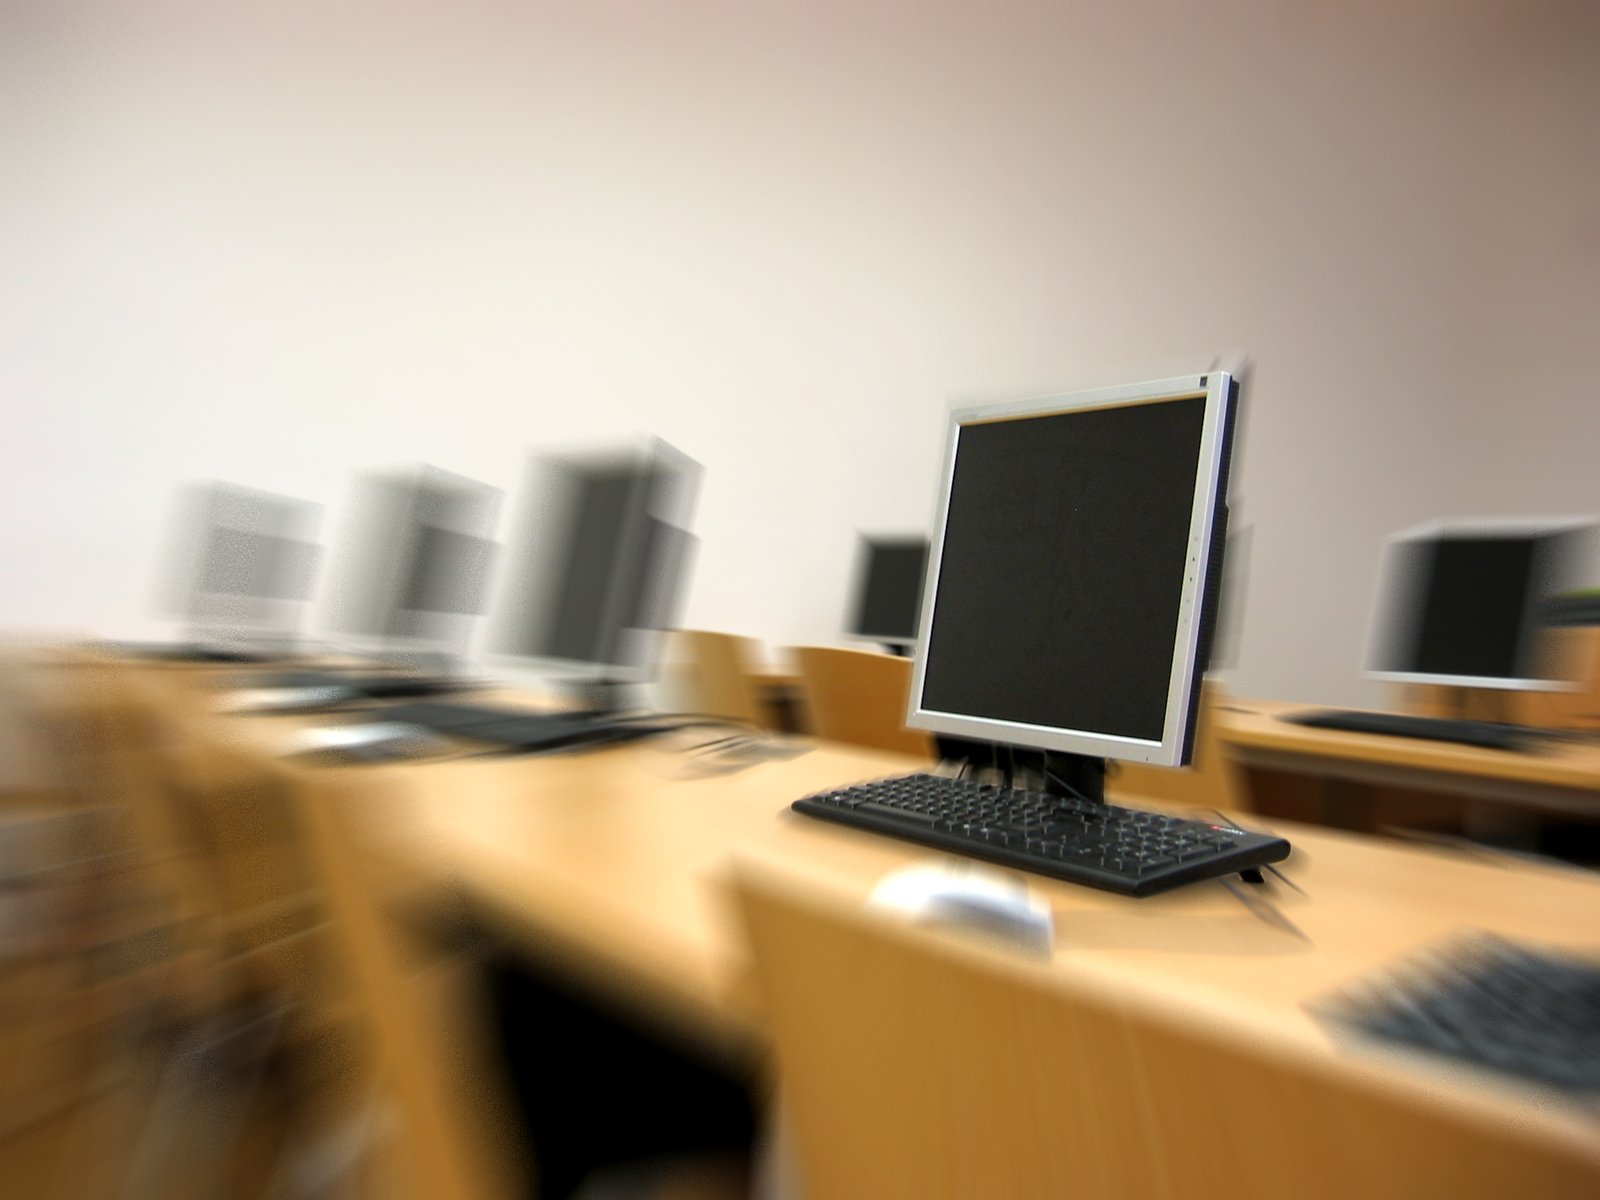 computer equipment on top of wooden desks in a classroom